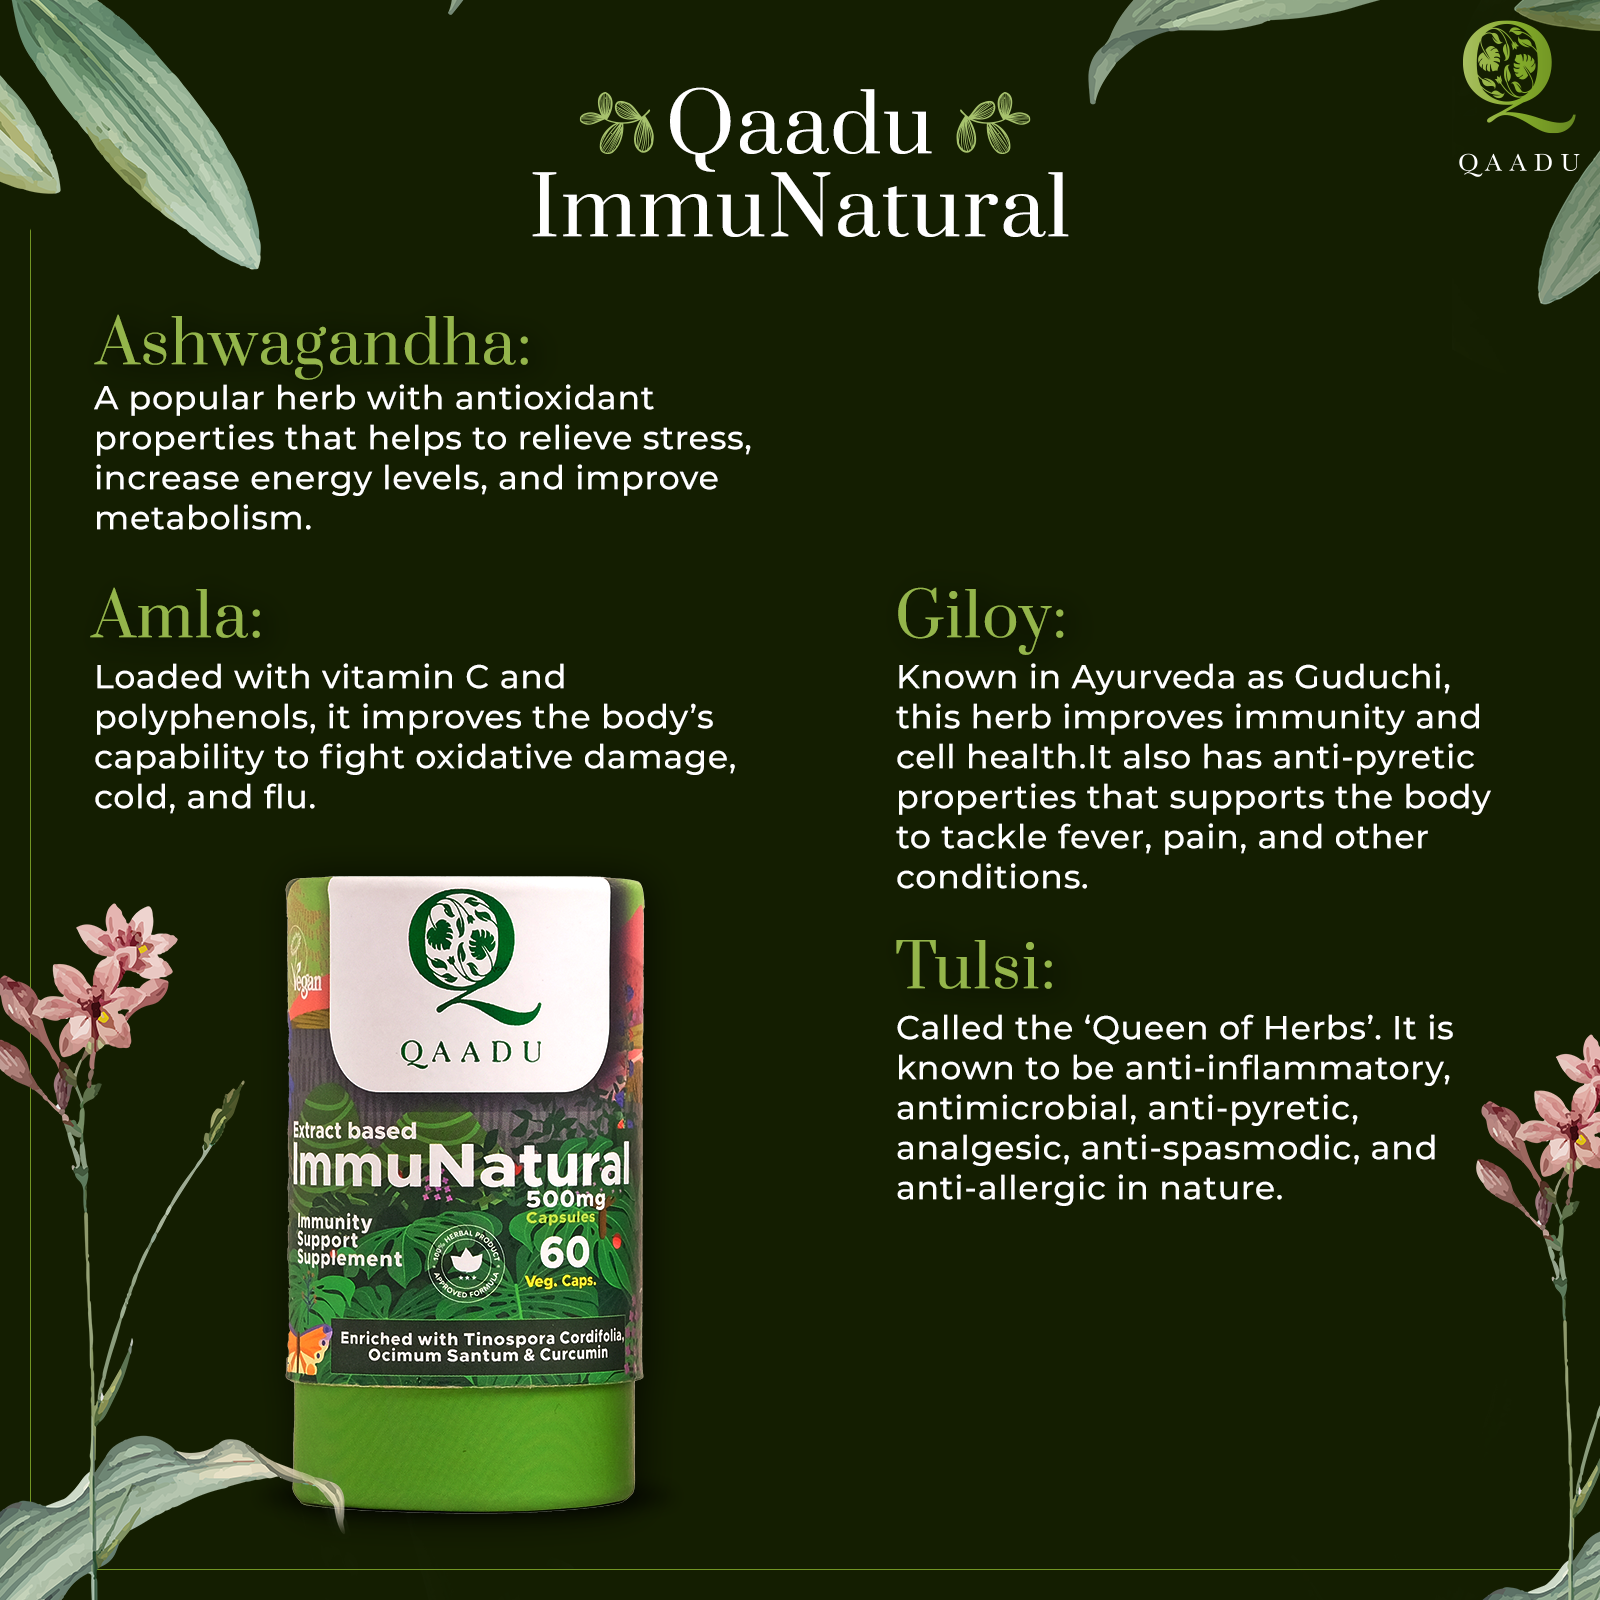 Immunatural